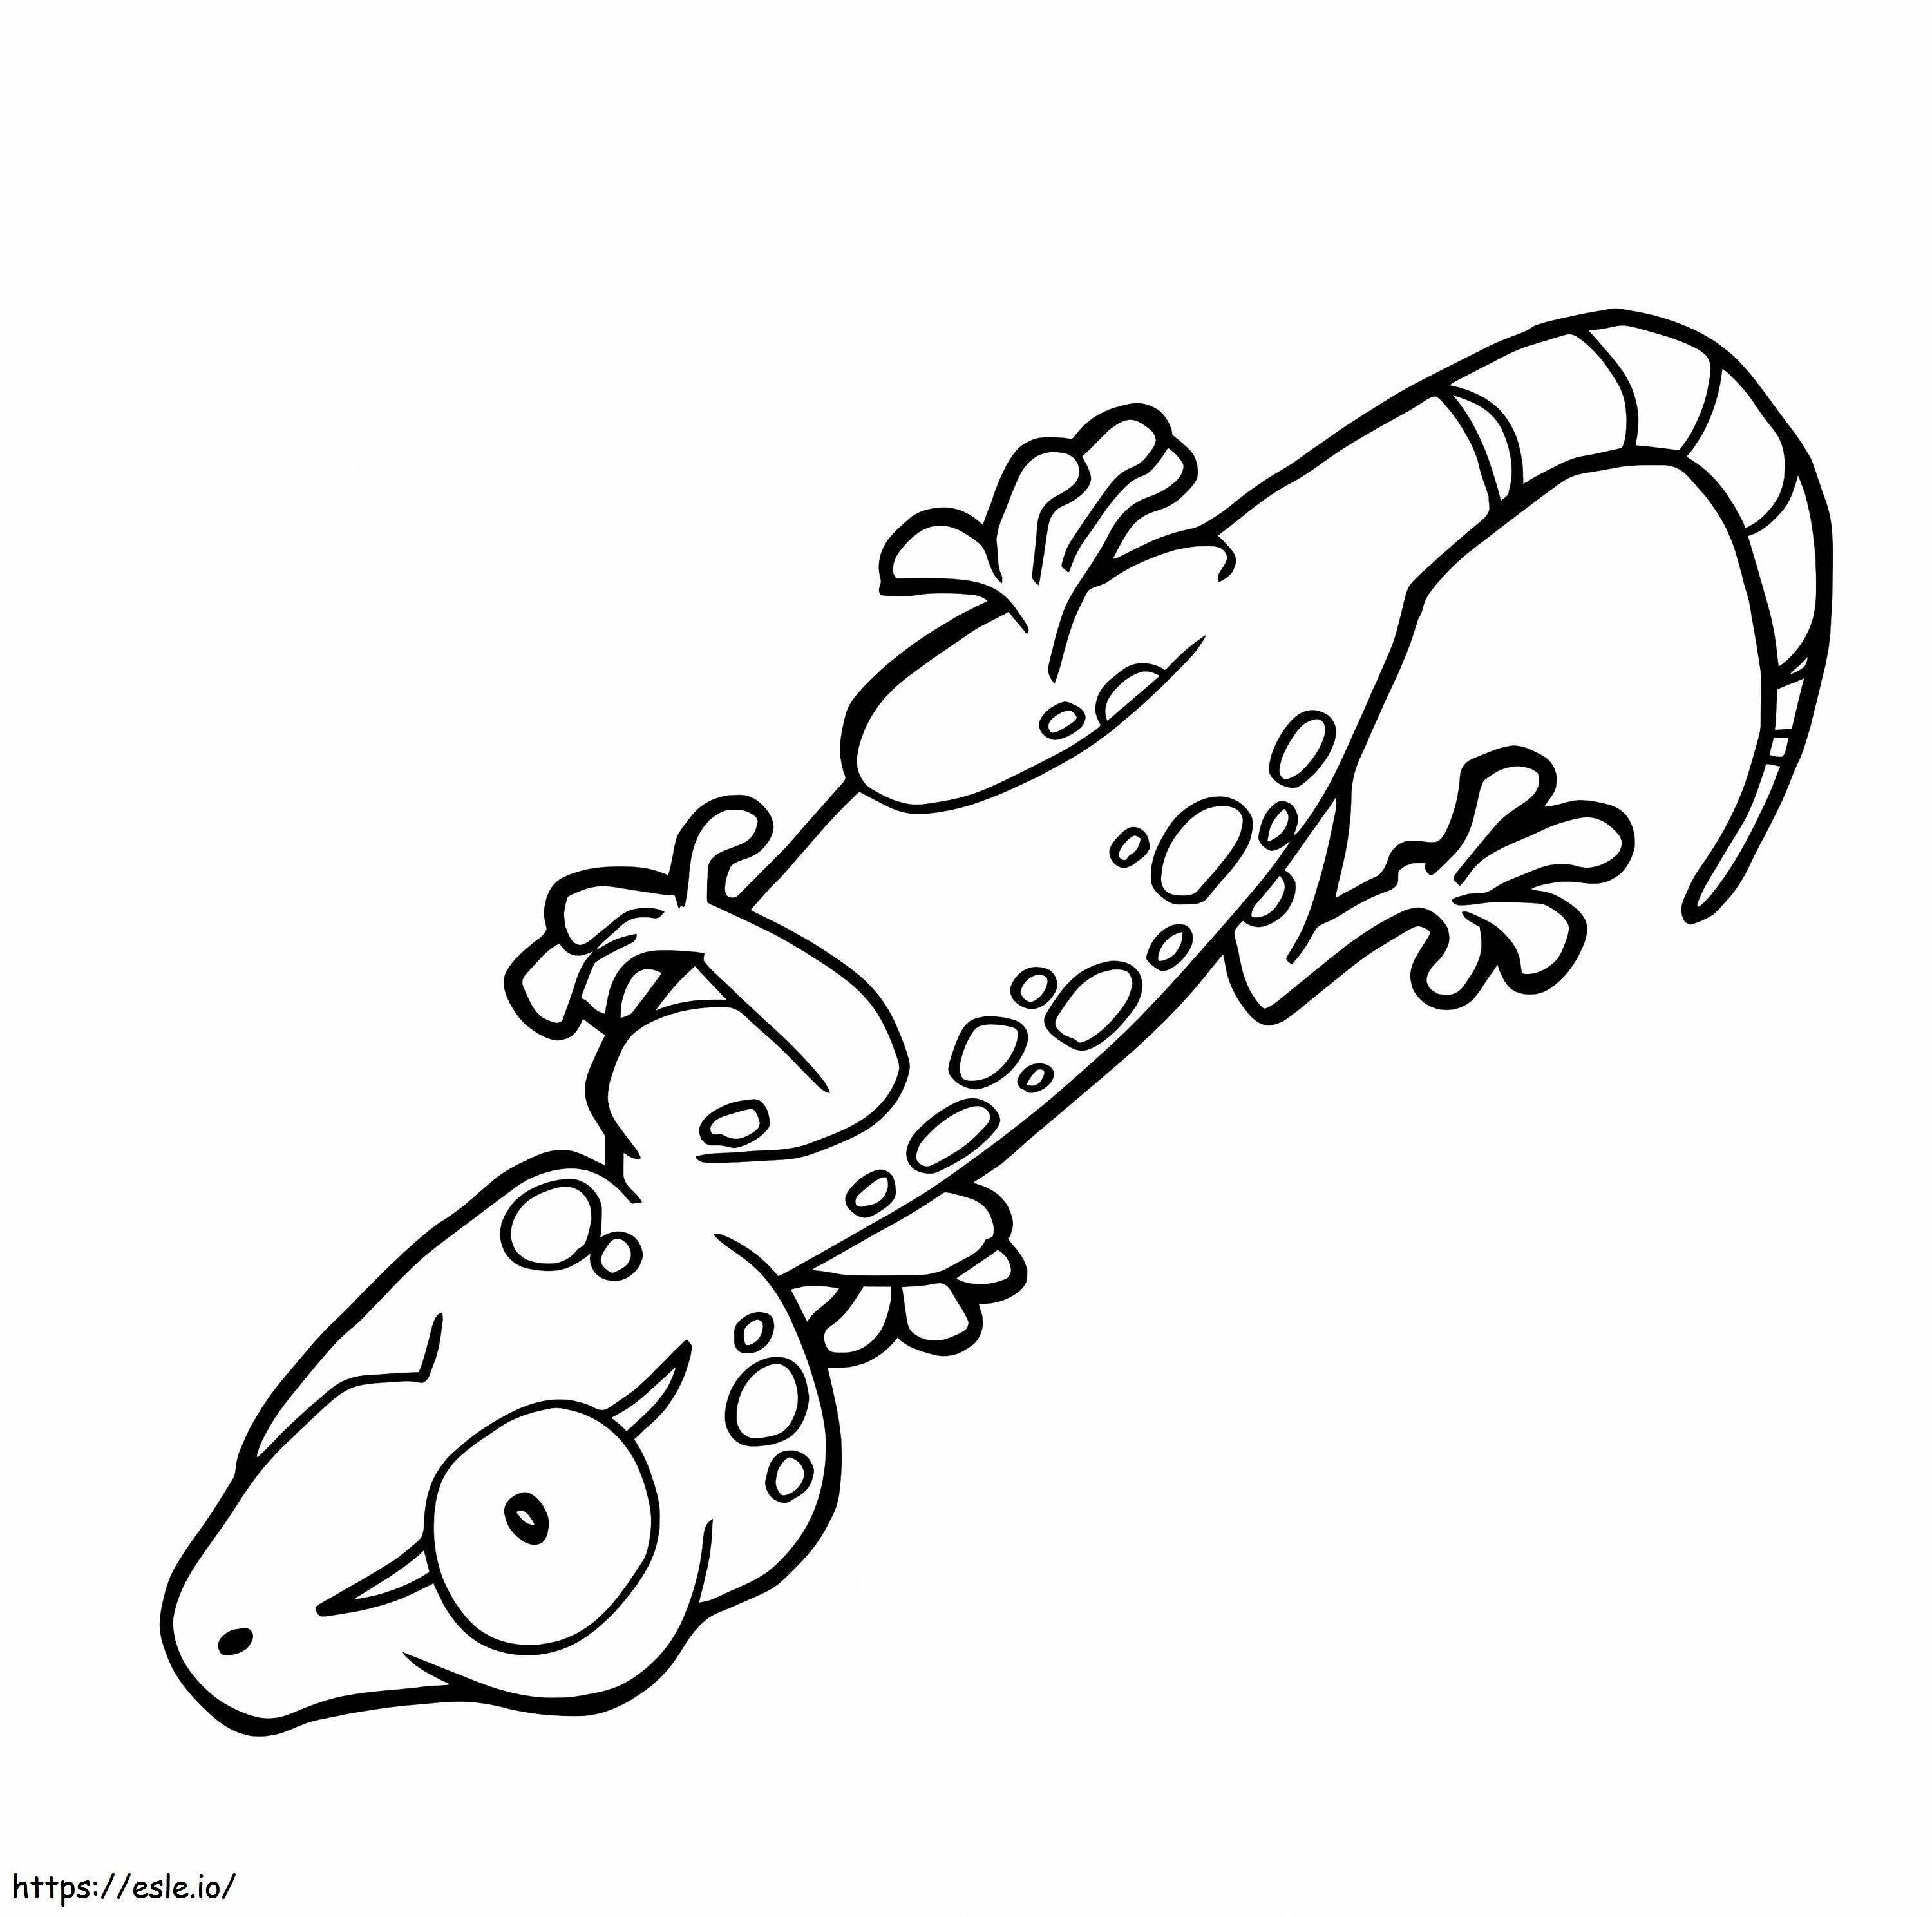 Cute Cartoon Gecko coloring page